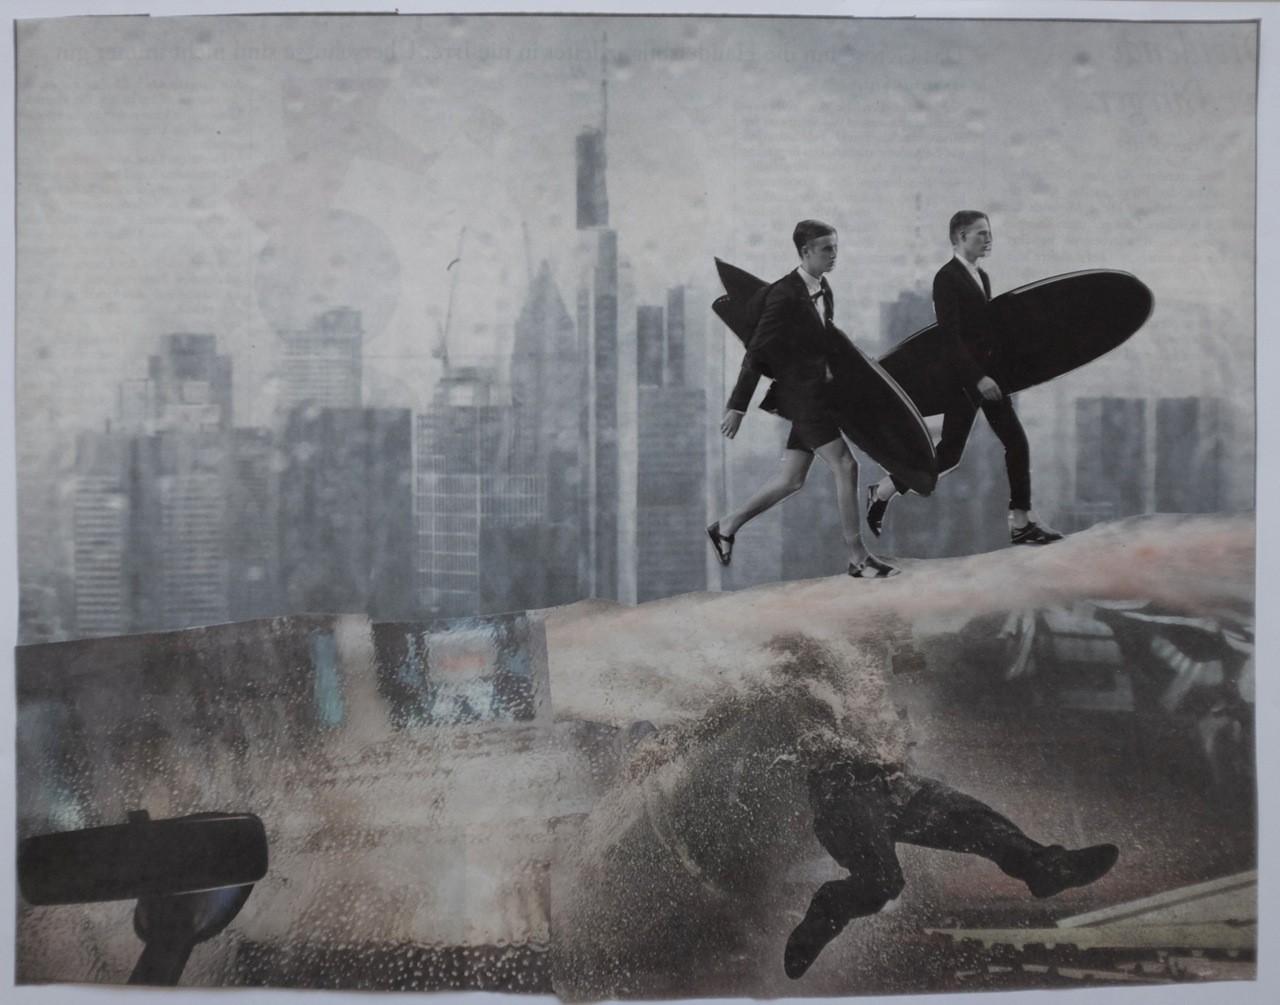  Sweep - von Handcut Paper Collage (31cm x 24cm) © Edel Seebauer